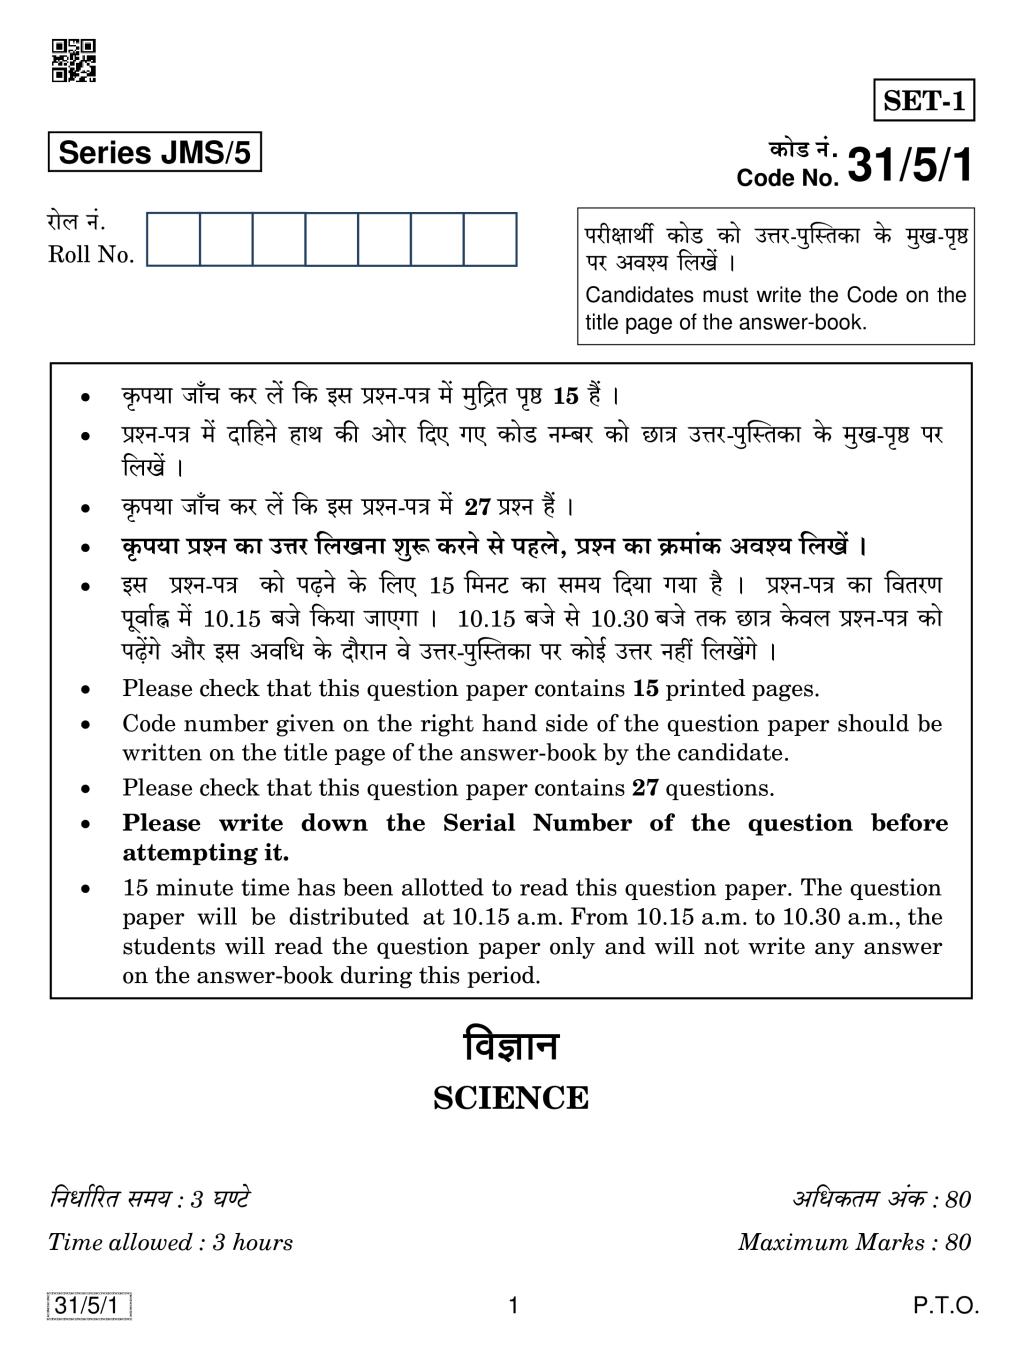 CBSE Class 10 Science Question Paper 2019 Set 5 - Page 1